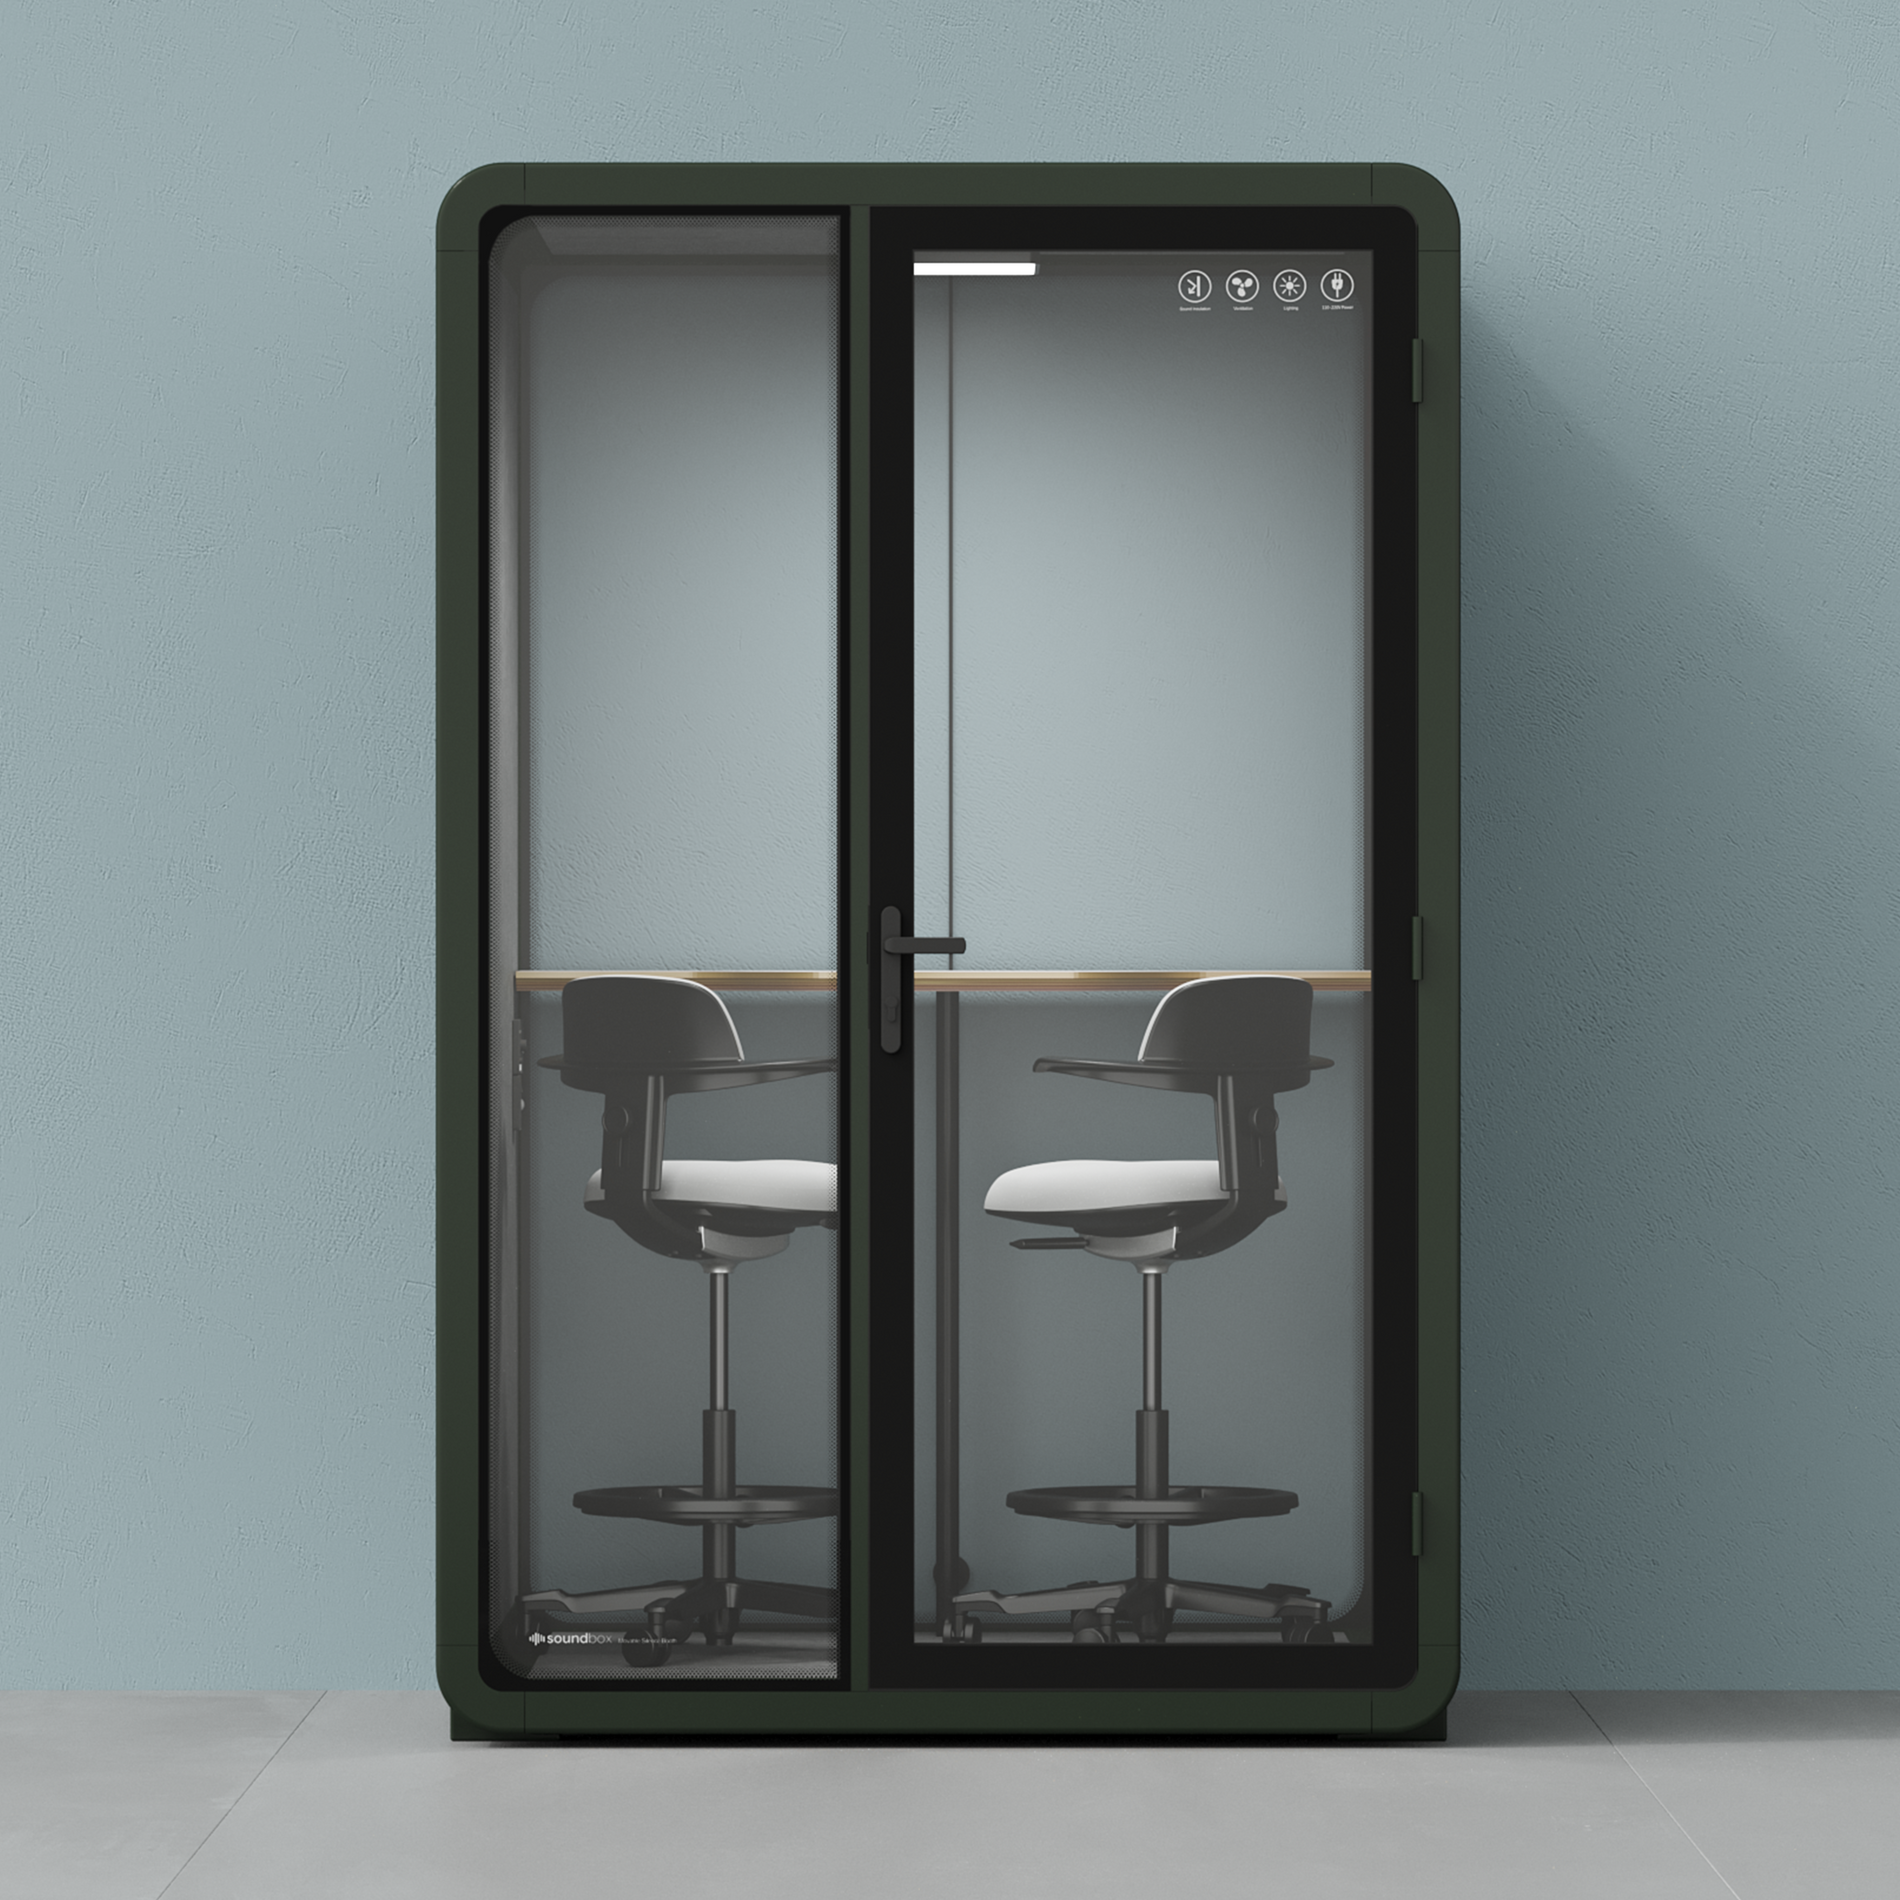 Quell - CoWorker - Pod per 2 personeDark Green / Dark Gray / Dual Zoom Room + Device Shelf + 2 Barstools